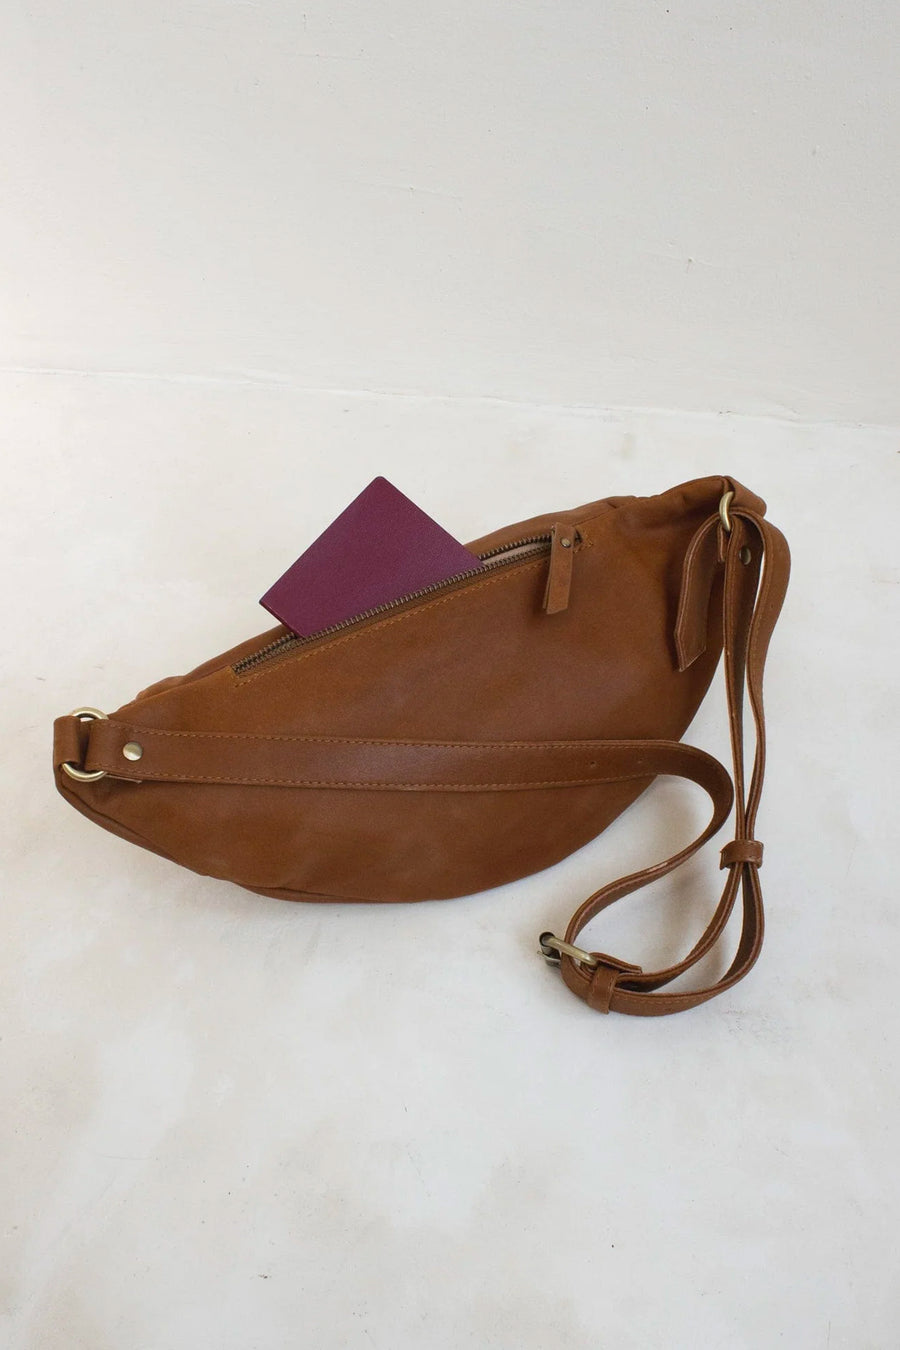 MANDRN Atlas Leather Bag in Tan